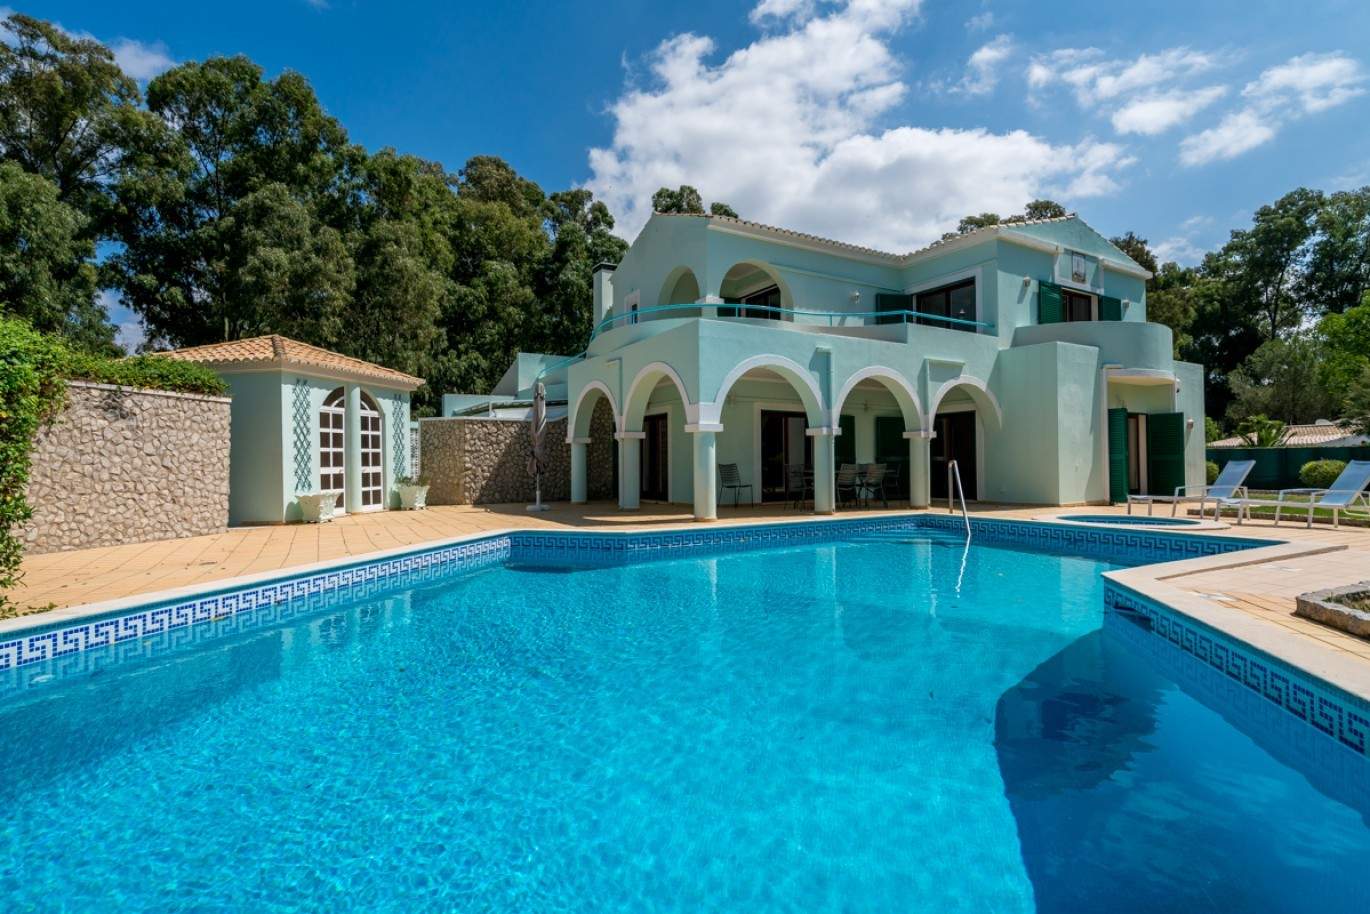 Venta de vivienda con piscina en la Penina, Alvor, Algarve, Portugal_83422